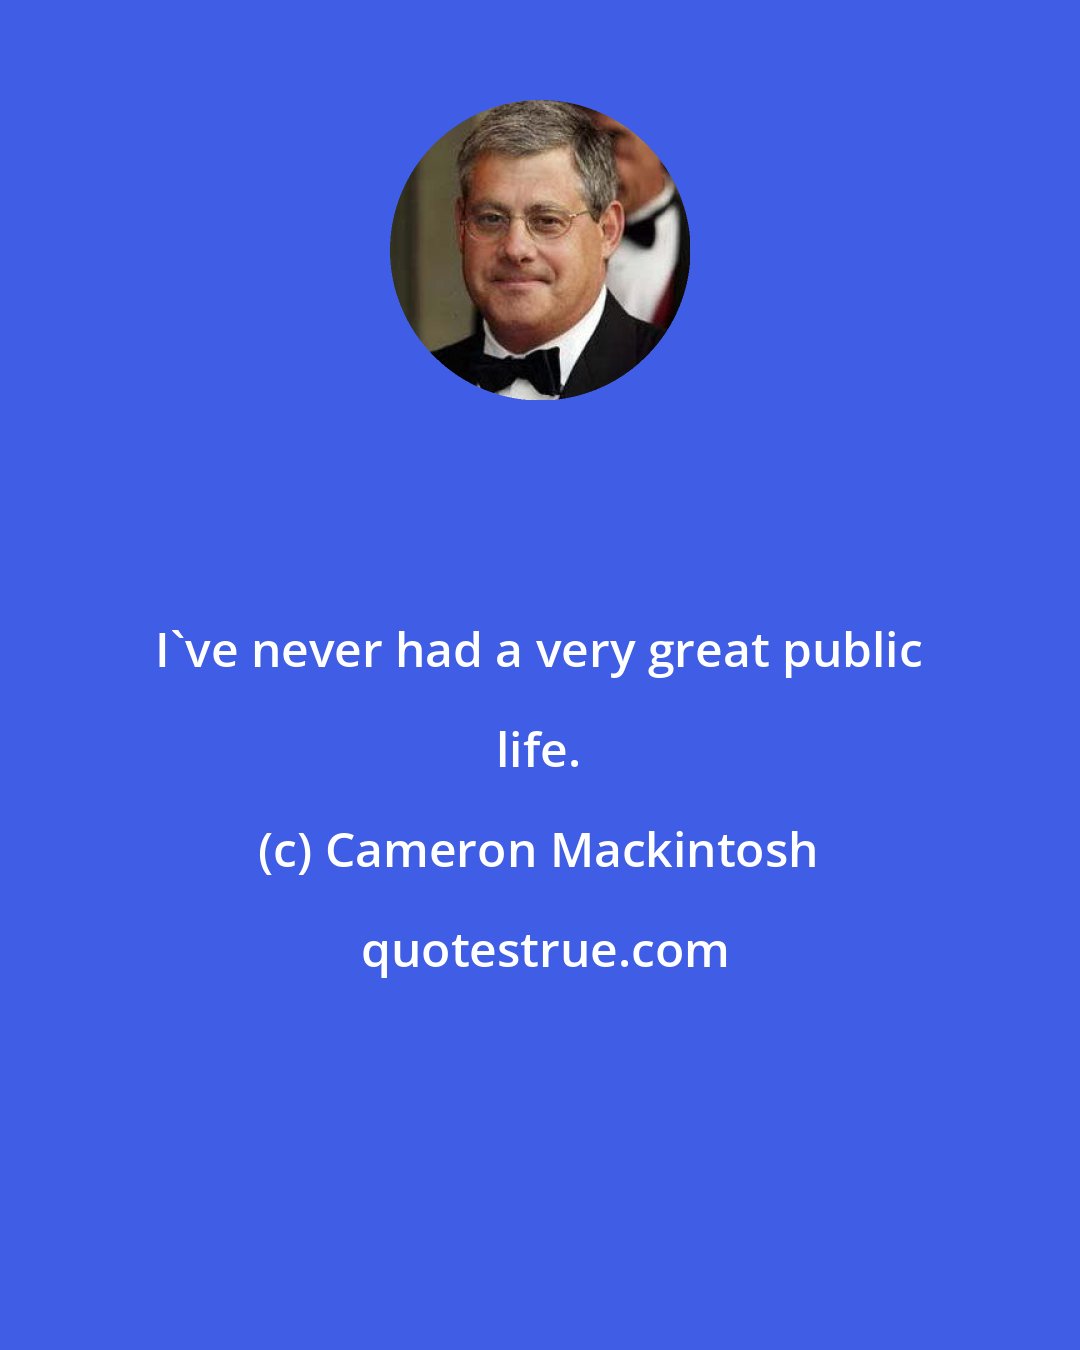 Cameron Mackintosh: I've never had a very great public life.